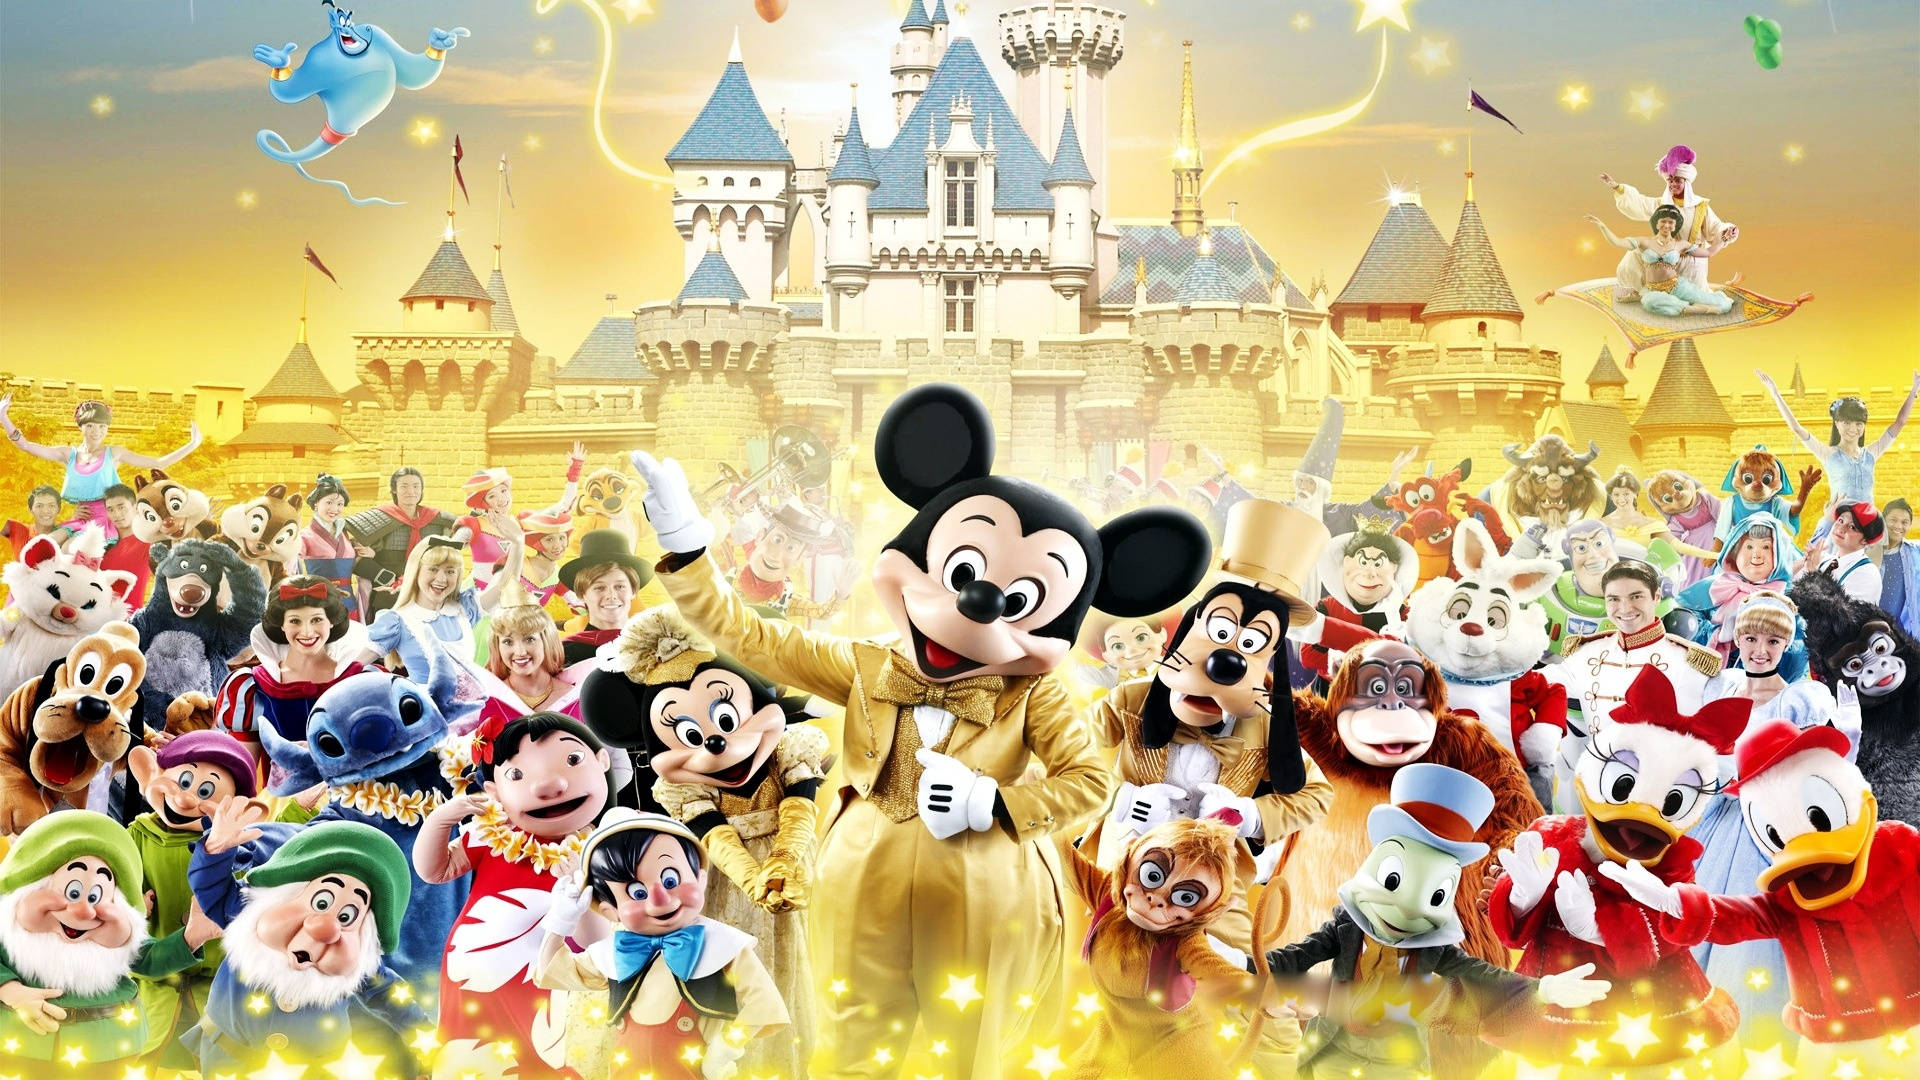 Disney 1920x1080 Hd Disney Mascots And Castle